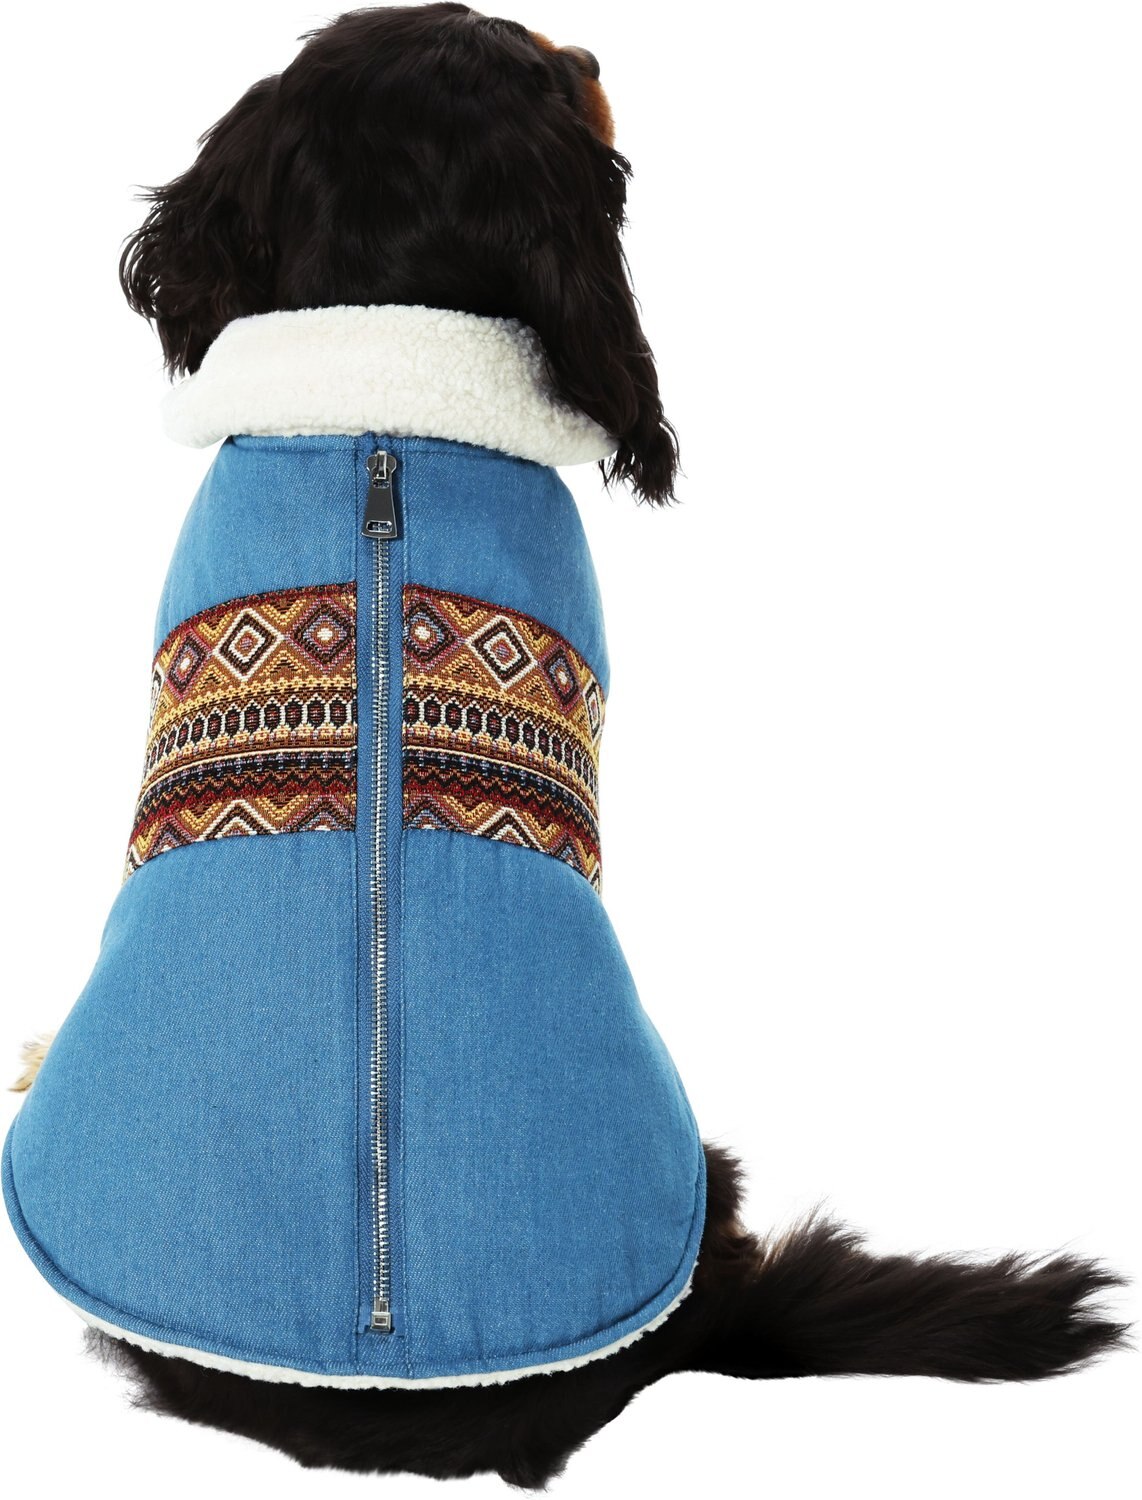 Re-purposed Dog Sweatshirts - Eco-friendly, Handmade, Cute Dog Sweaters –  Furbal Remedies